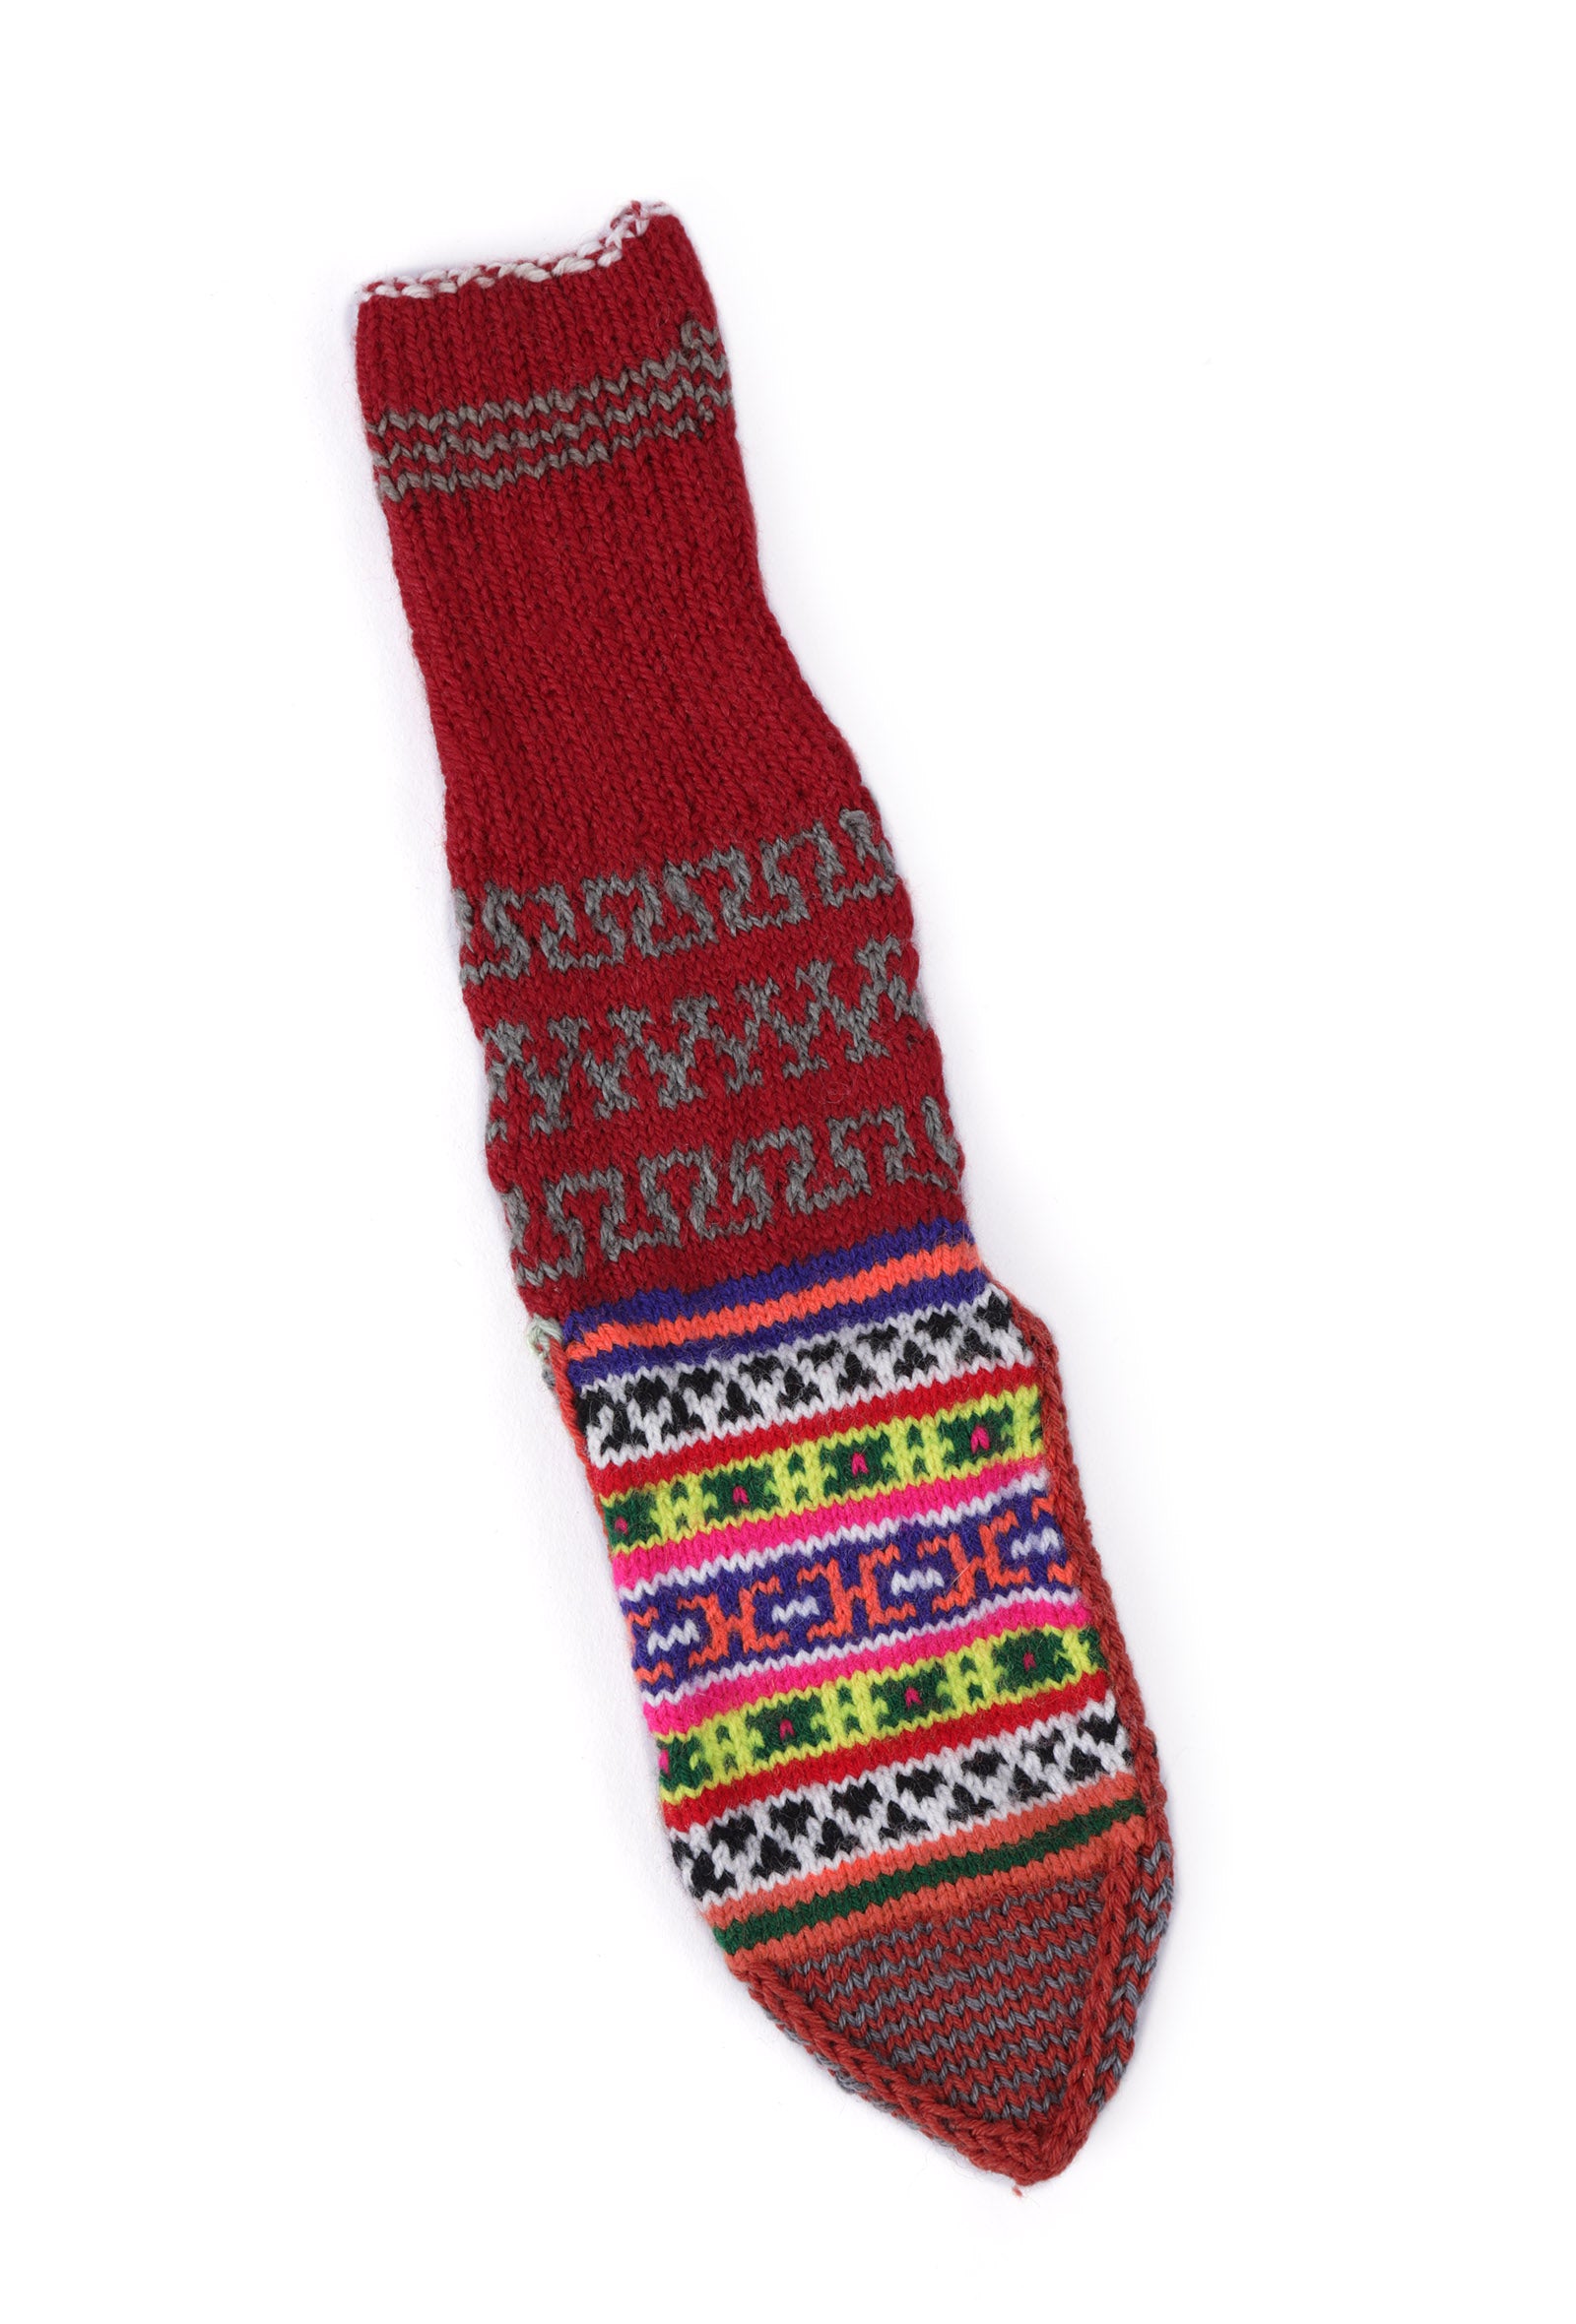 Red & Multi Hand Knitted Woolen Winter Socks